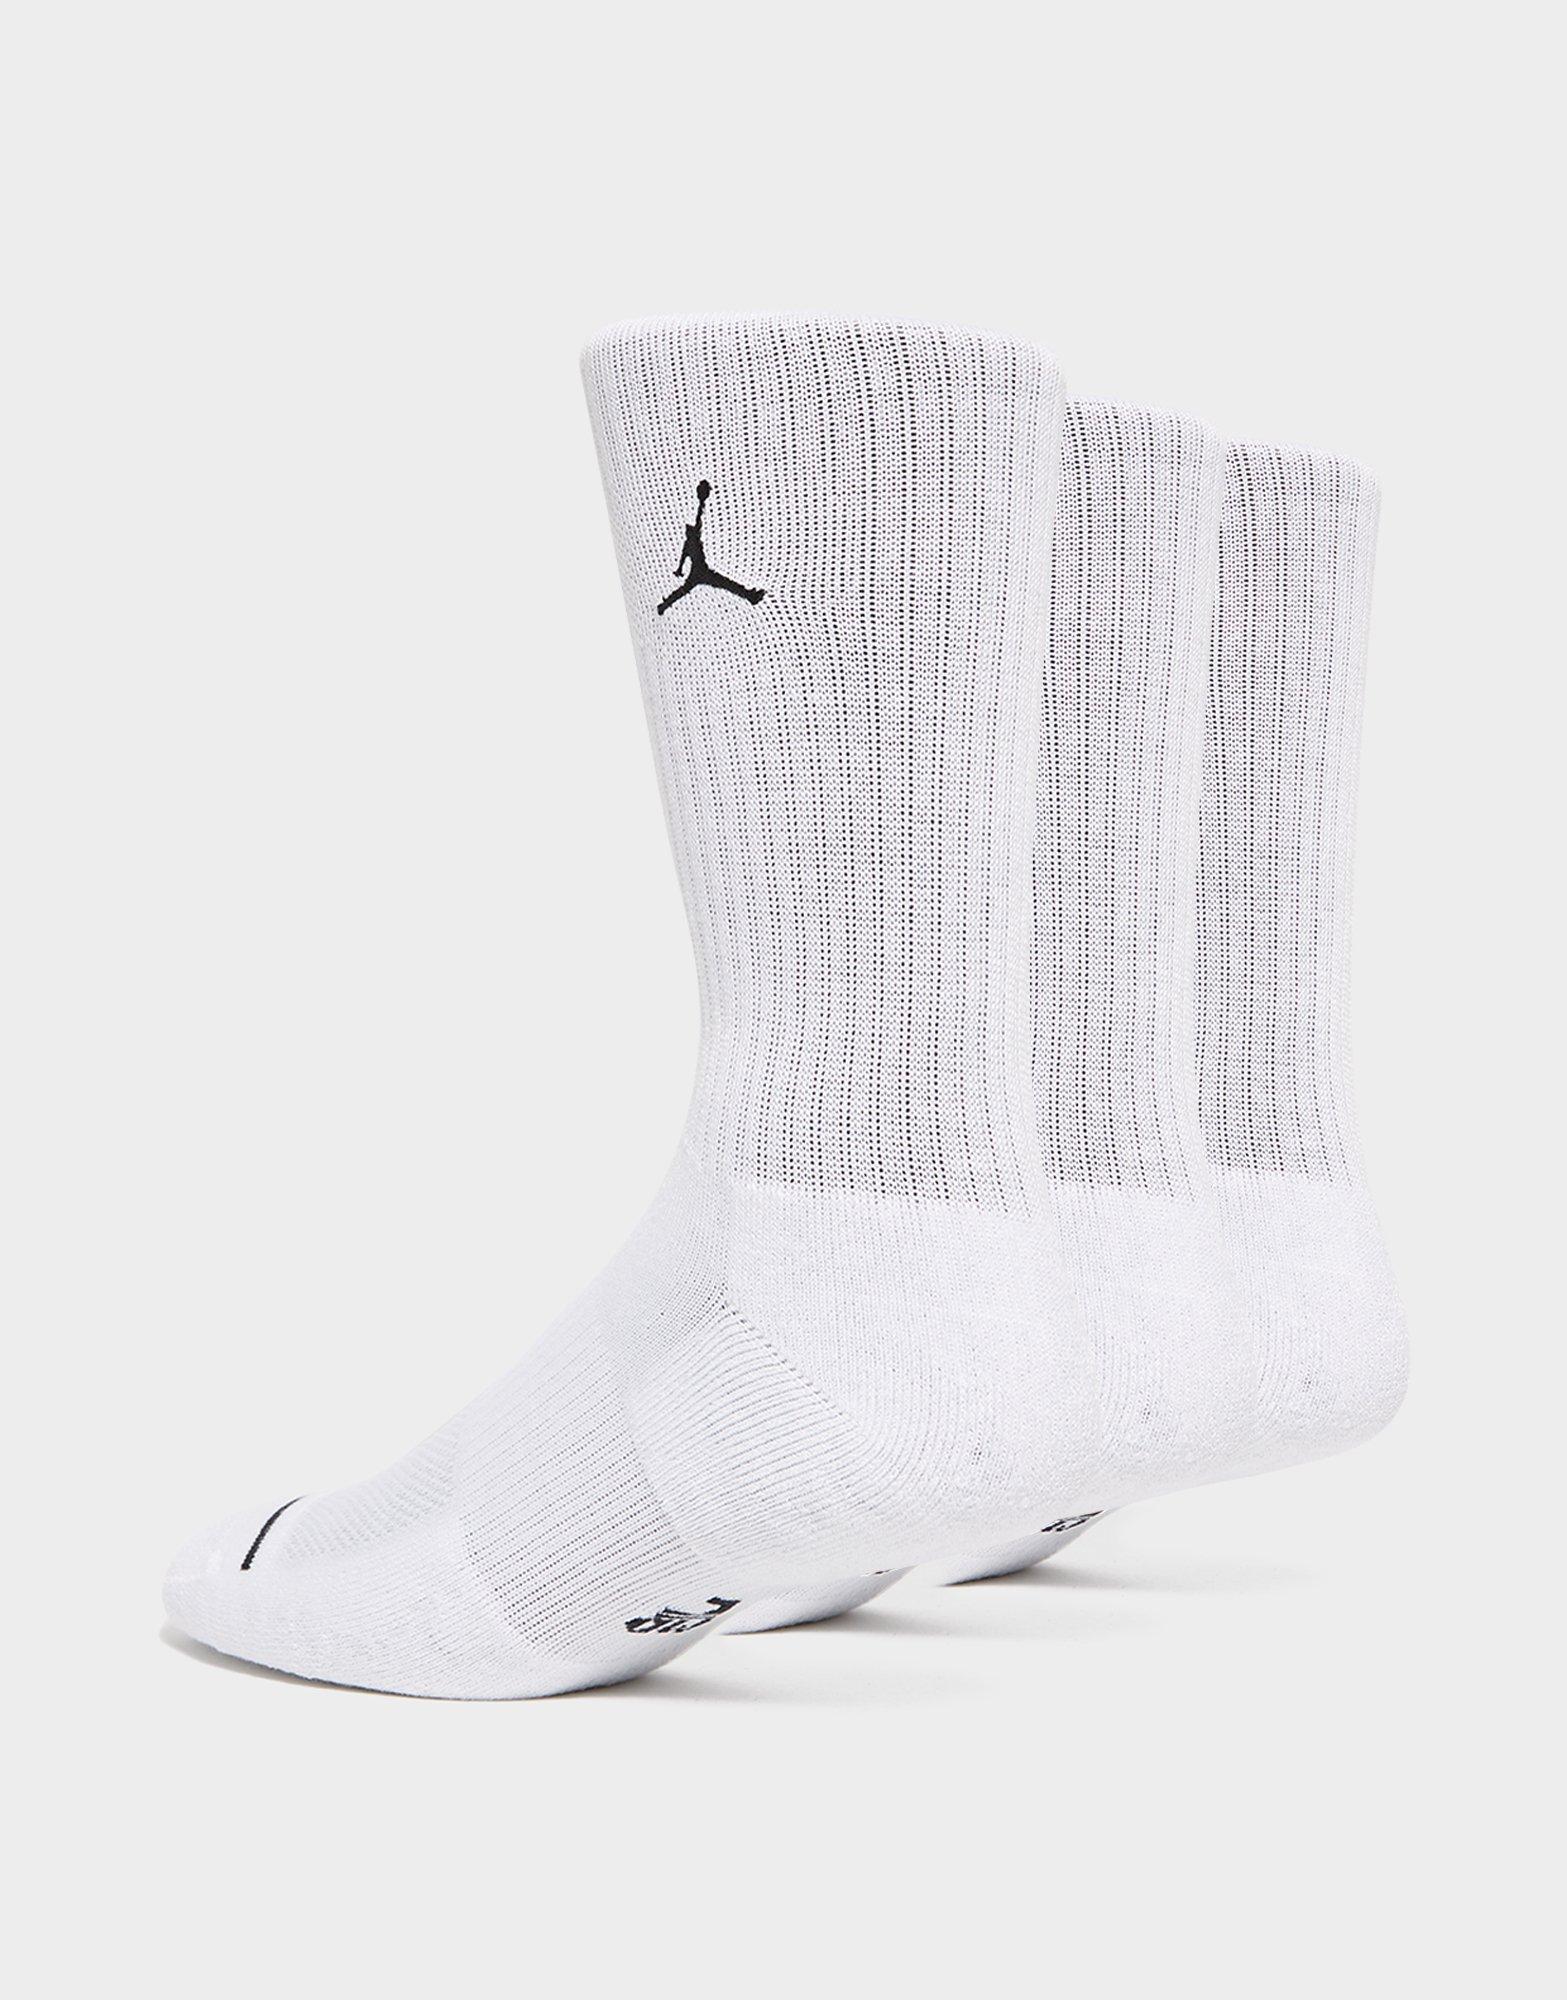 Jordan - Flight - Chaussettes - Blanc